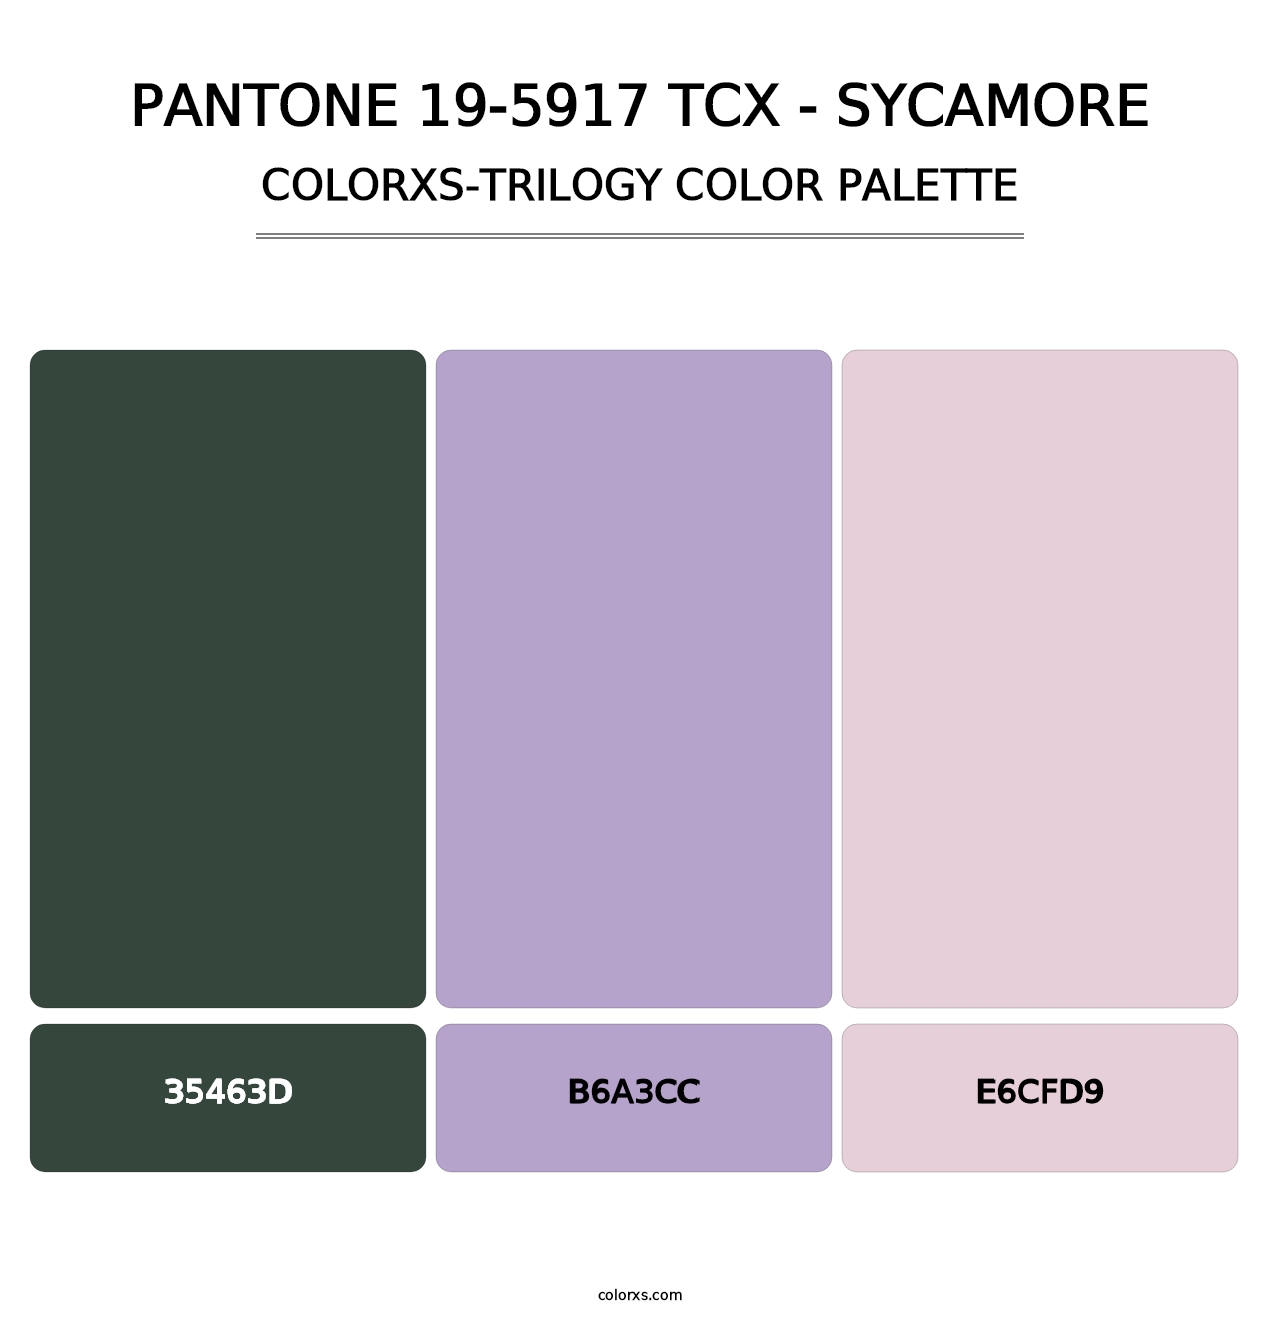 PANTONE 19-5917 TCX - Sycamore - Colorxs Trilogy Palette